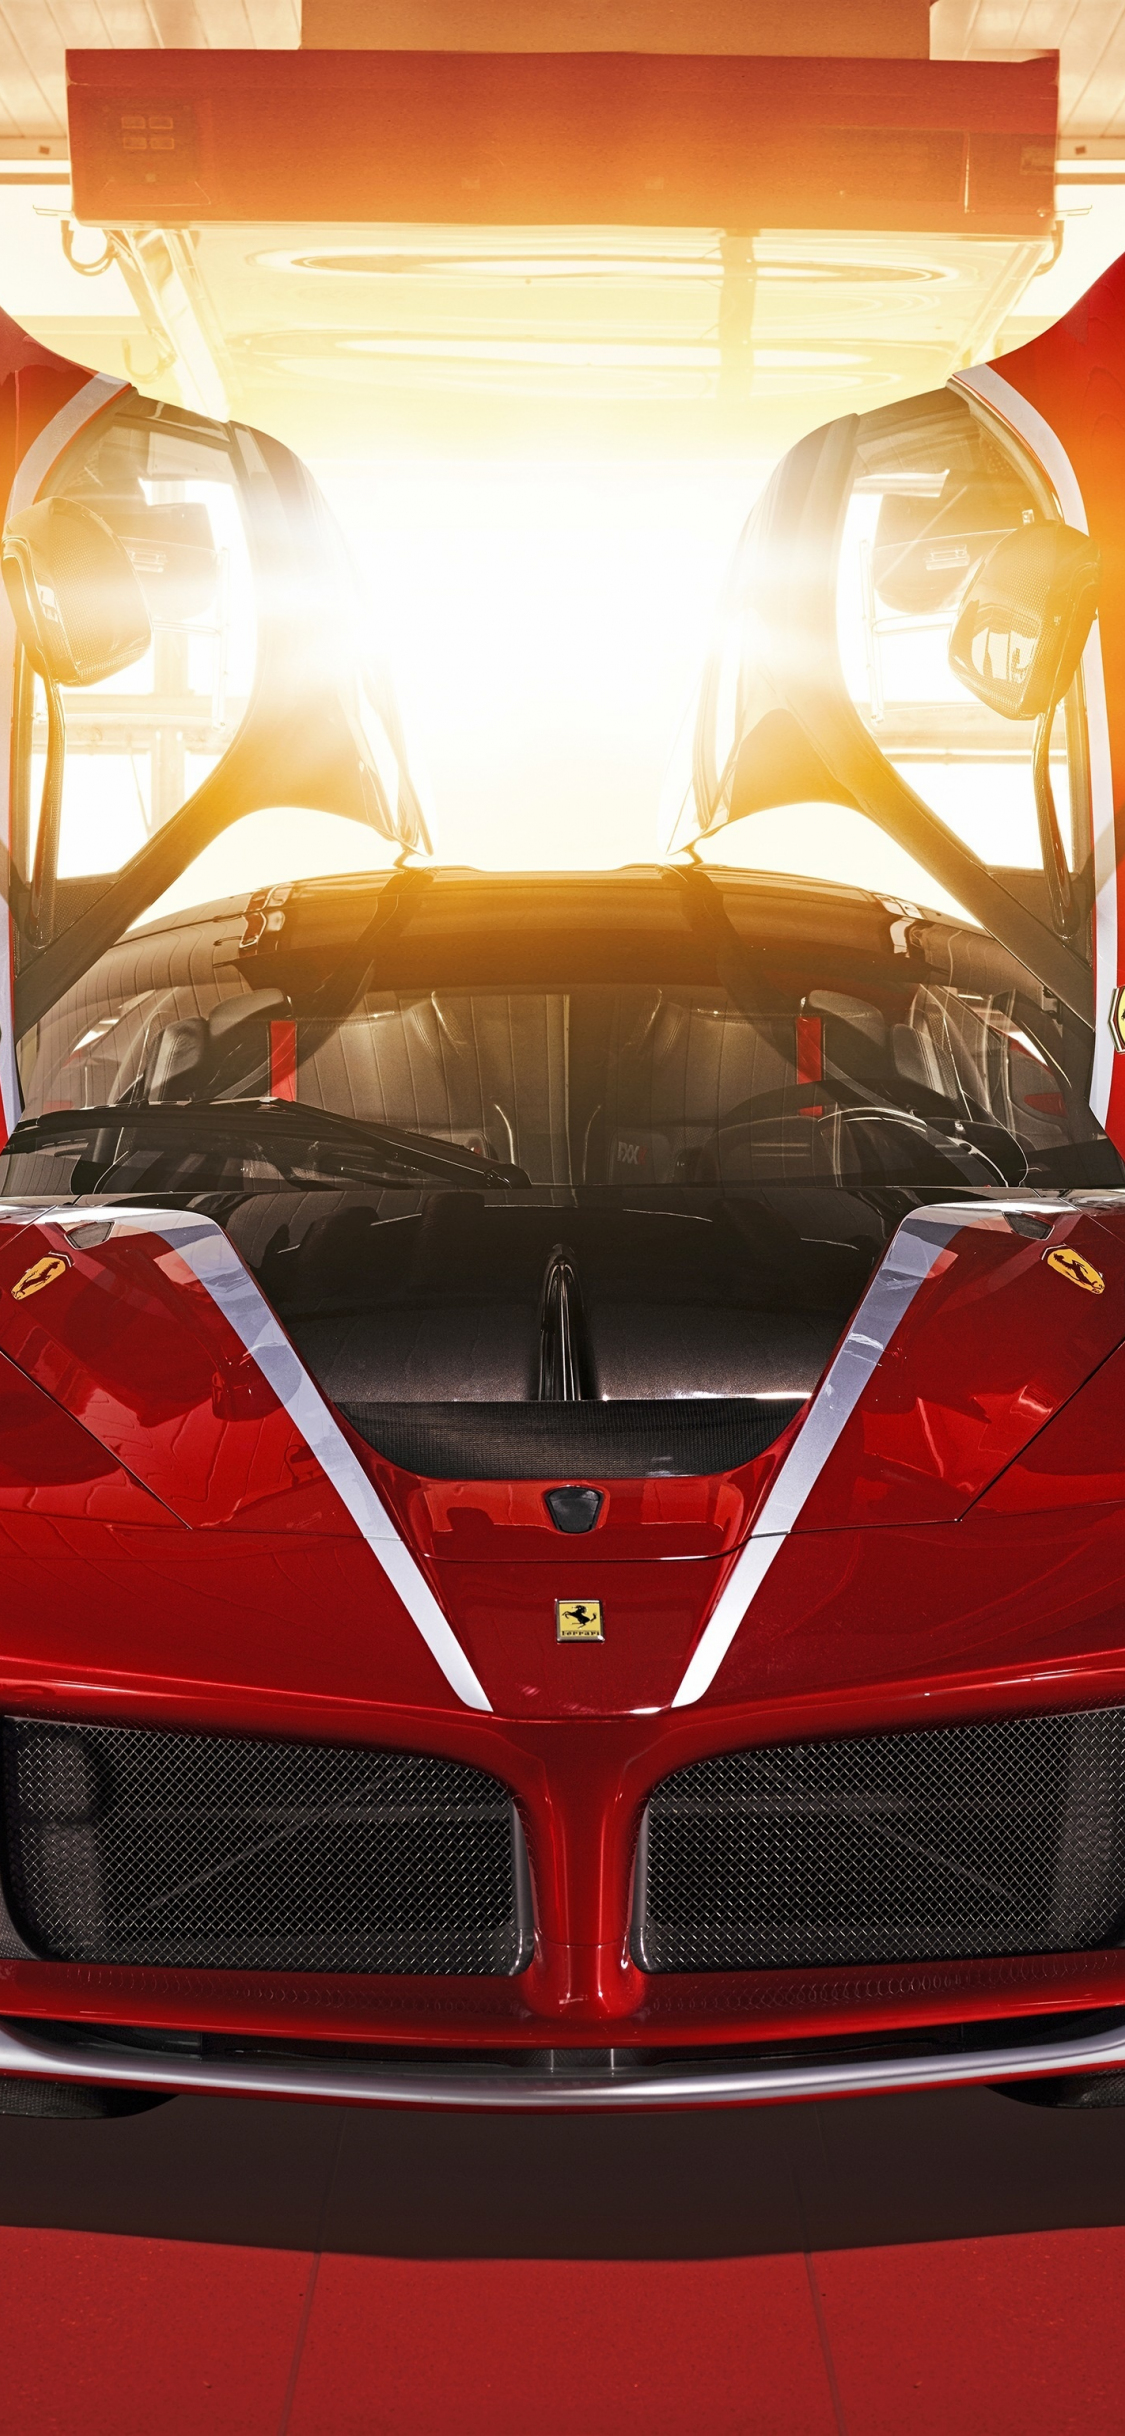 Download 1125x2436 Wallpaper Ferrari Fxx K Red Supercar Iphone X Images, Photos, Reviews